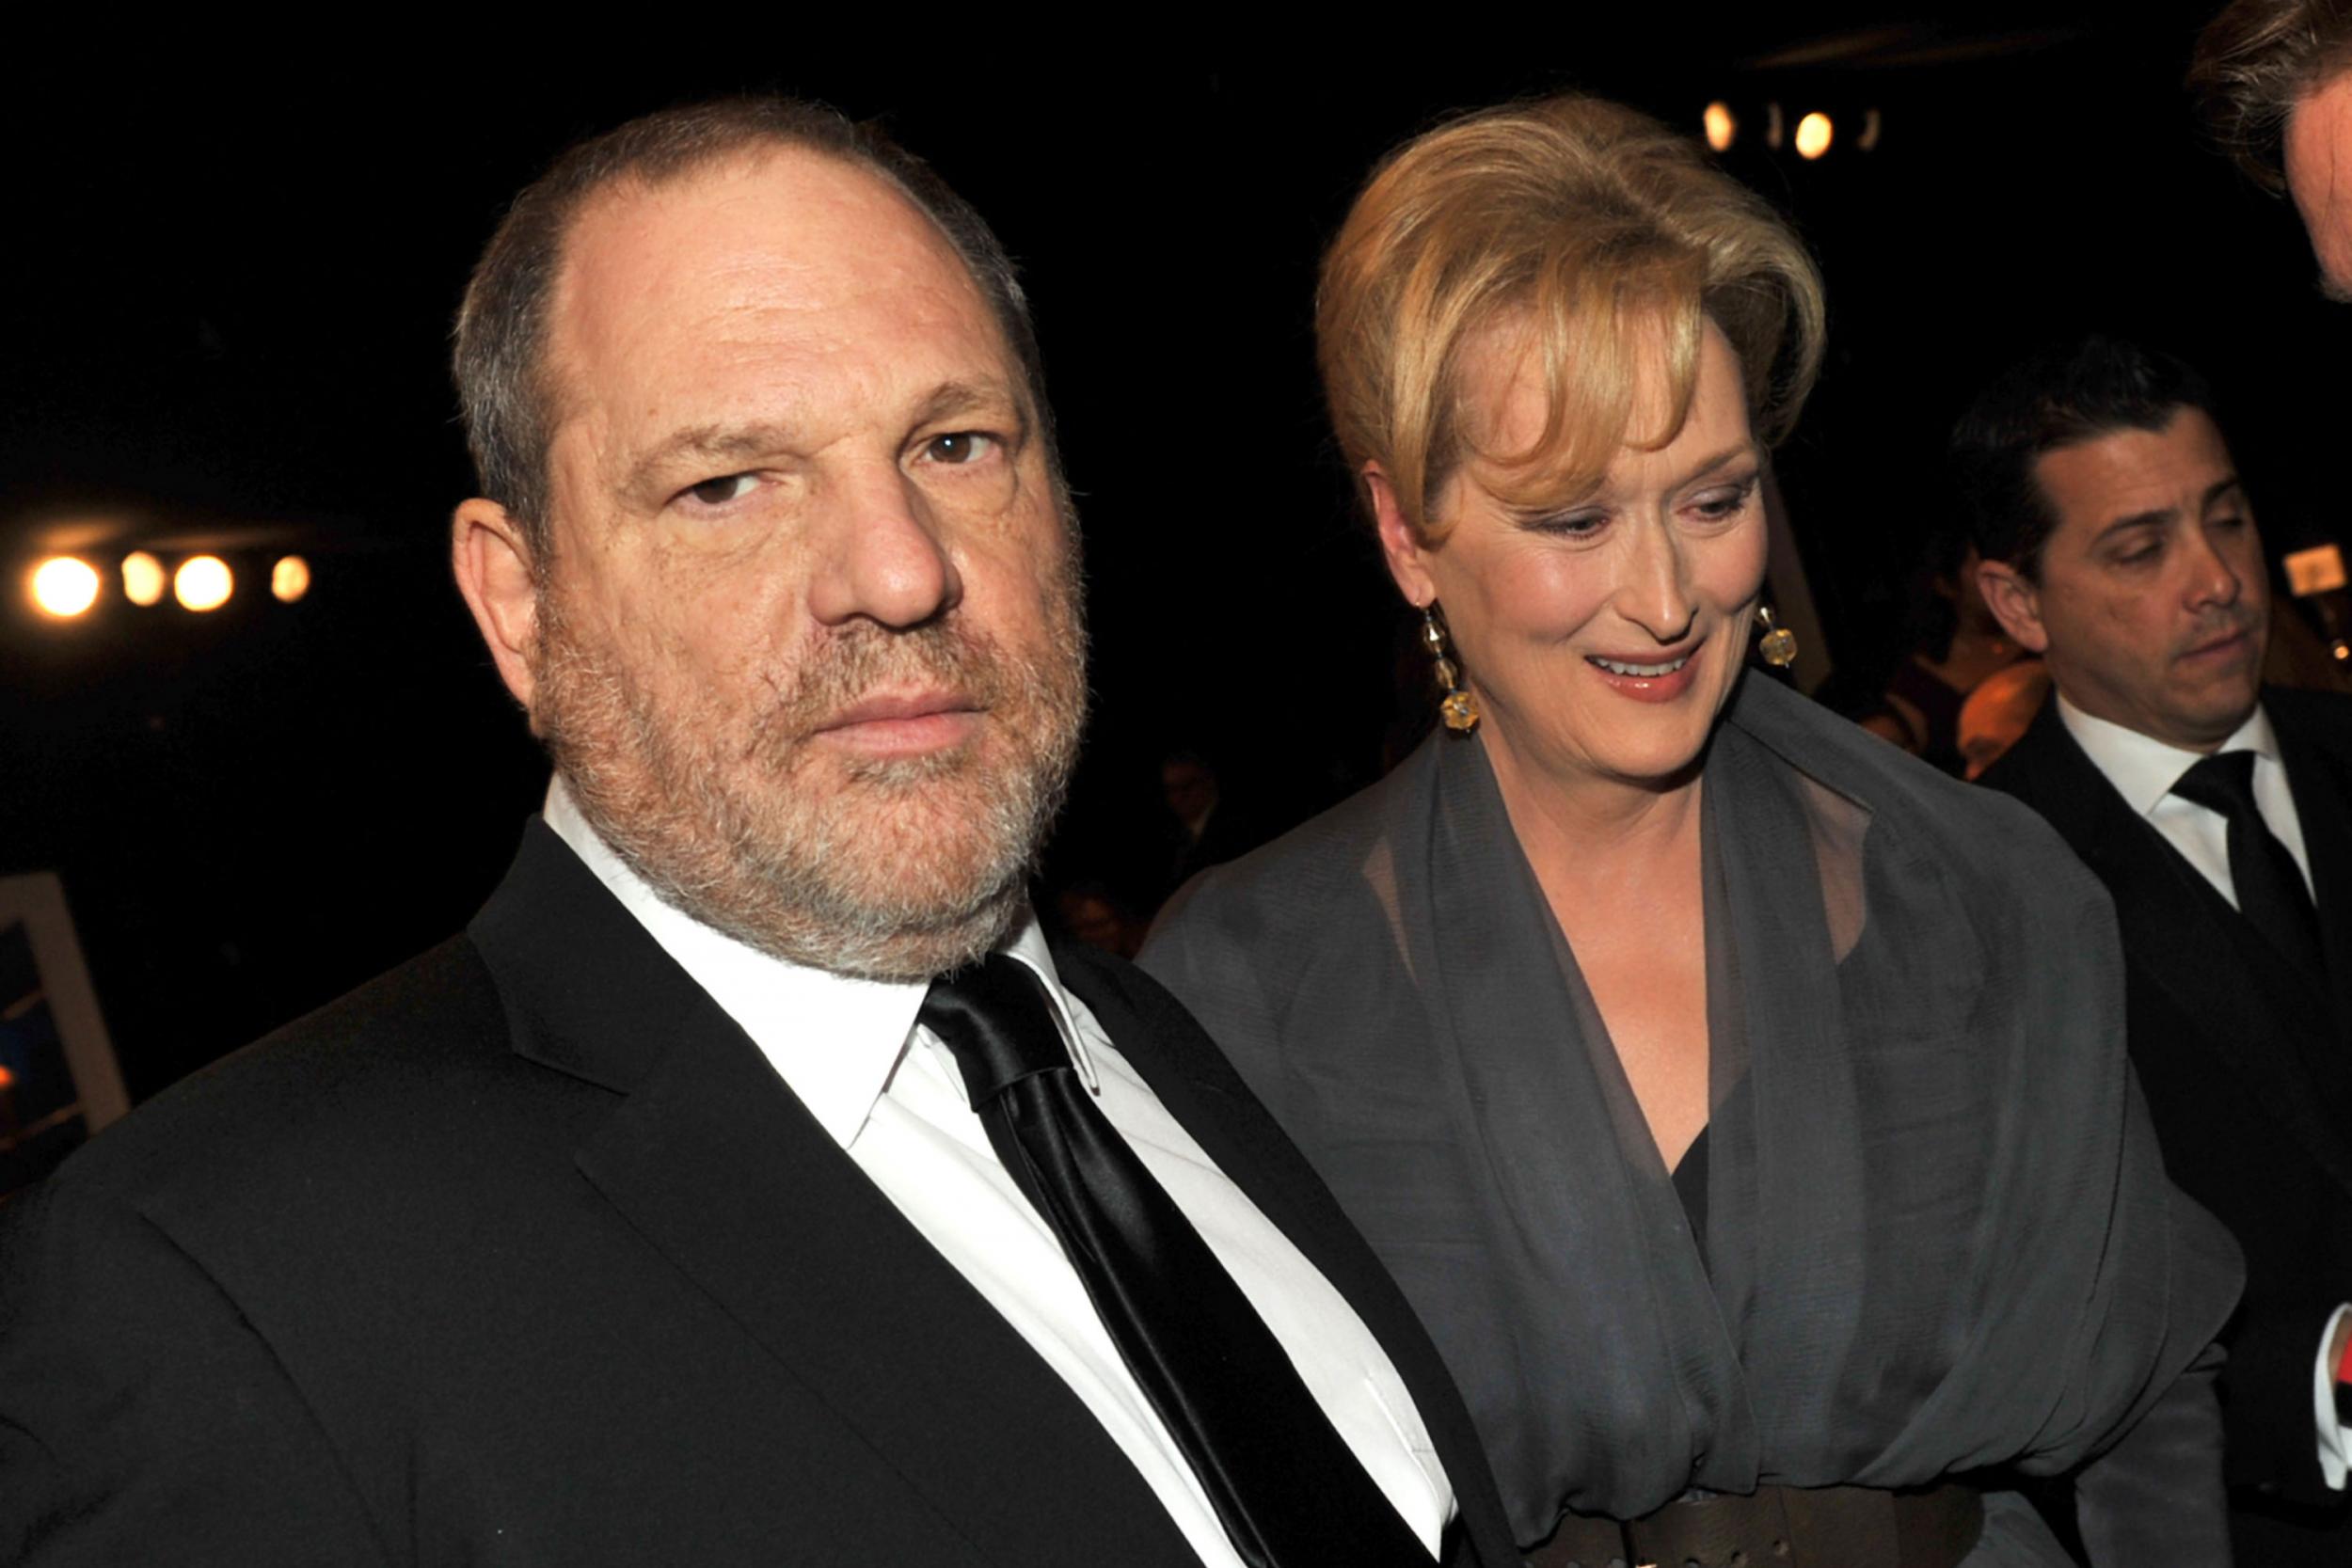 Harvey Weinstein with Meryl Streep in 2012